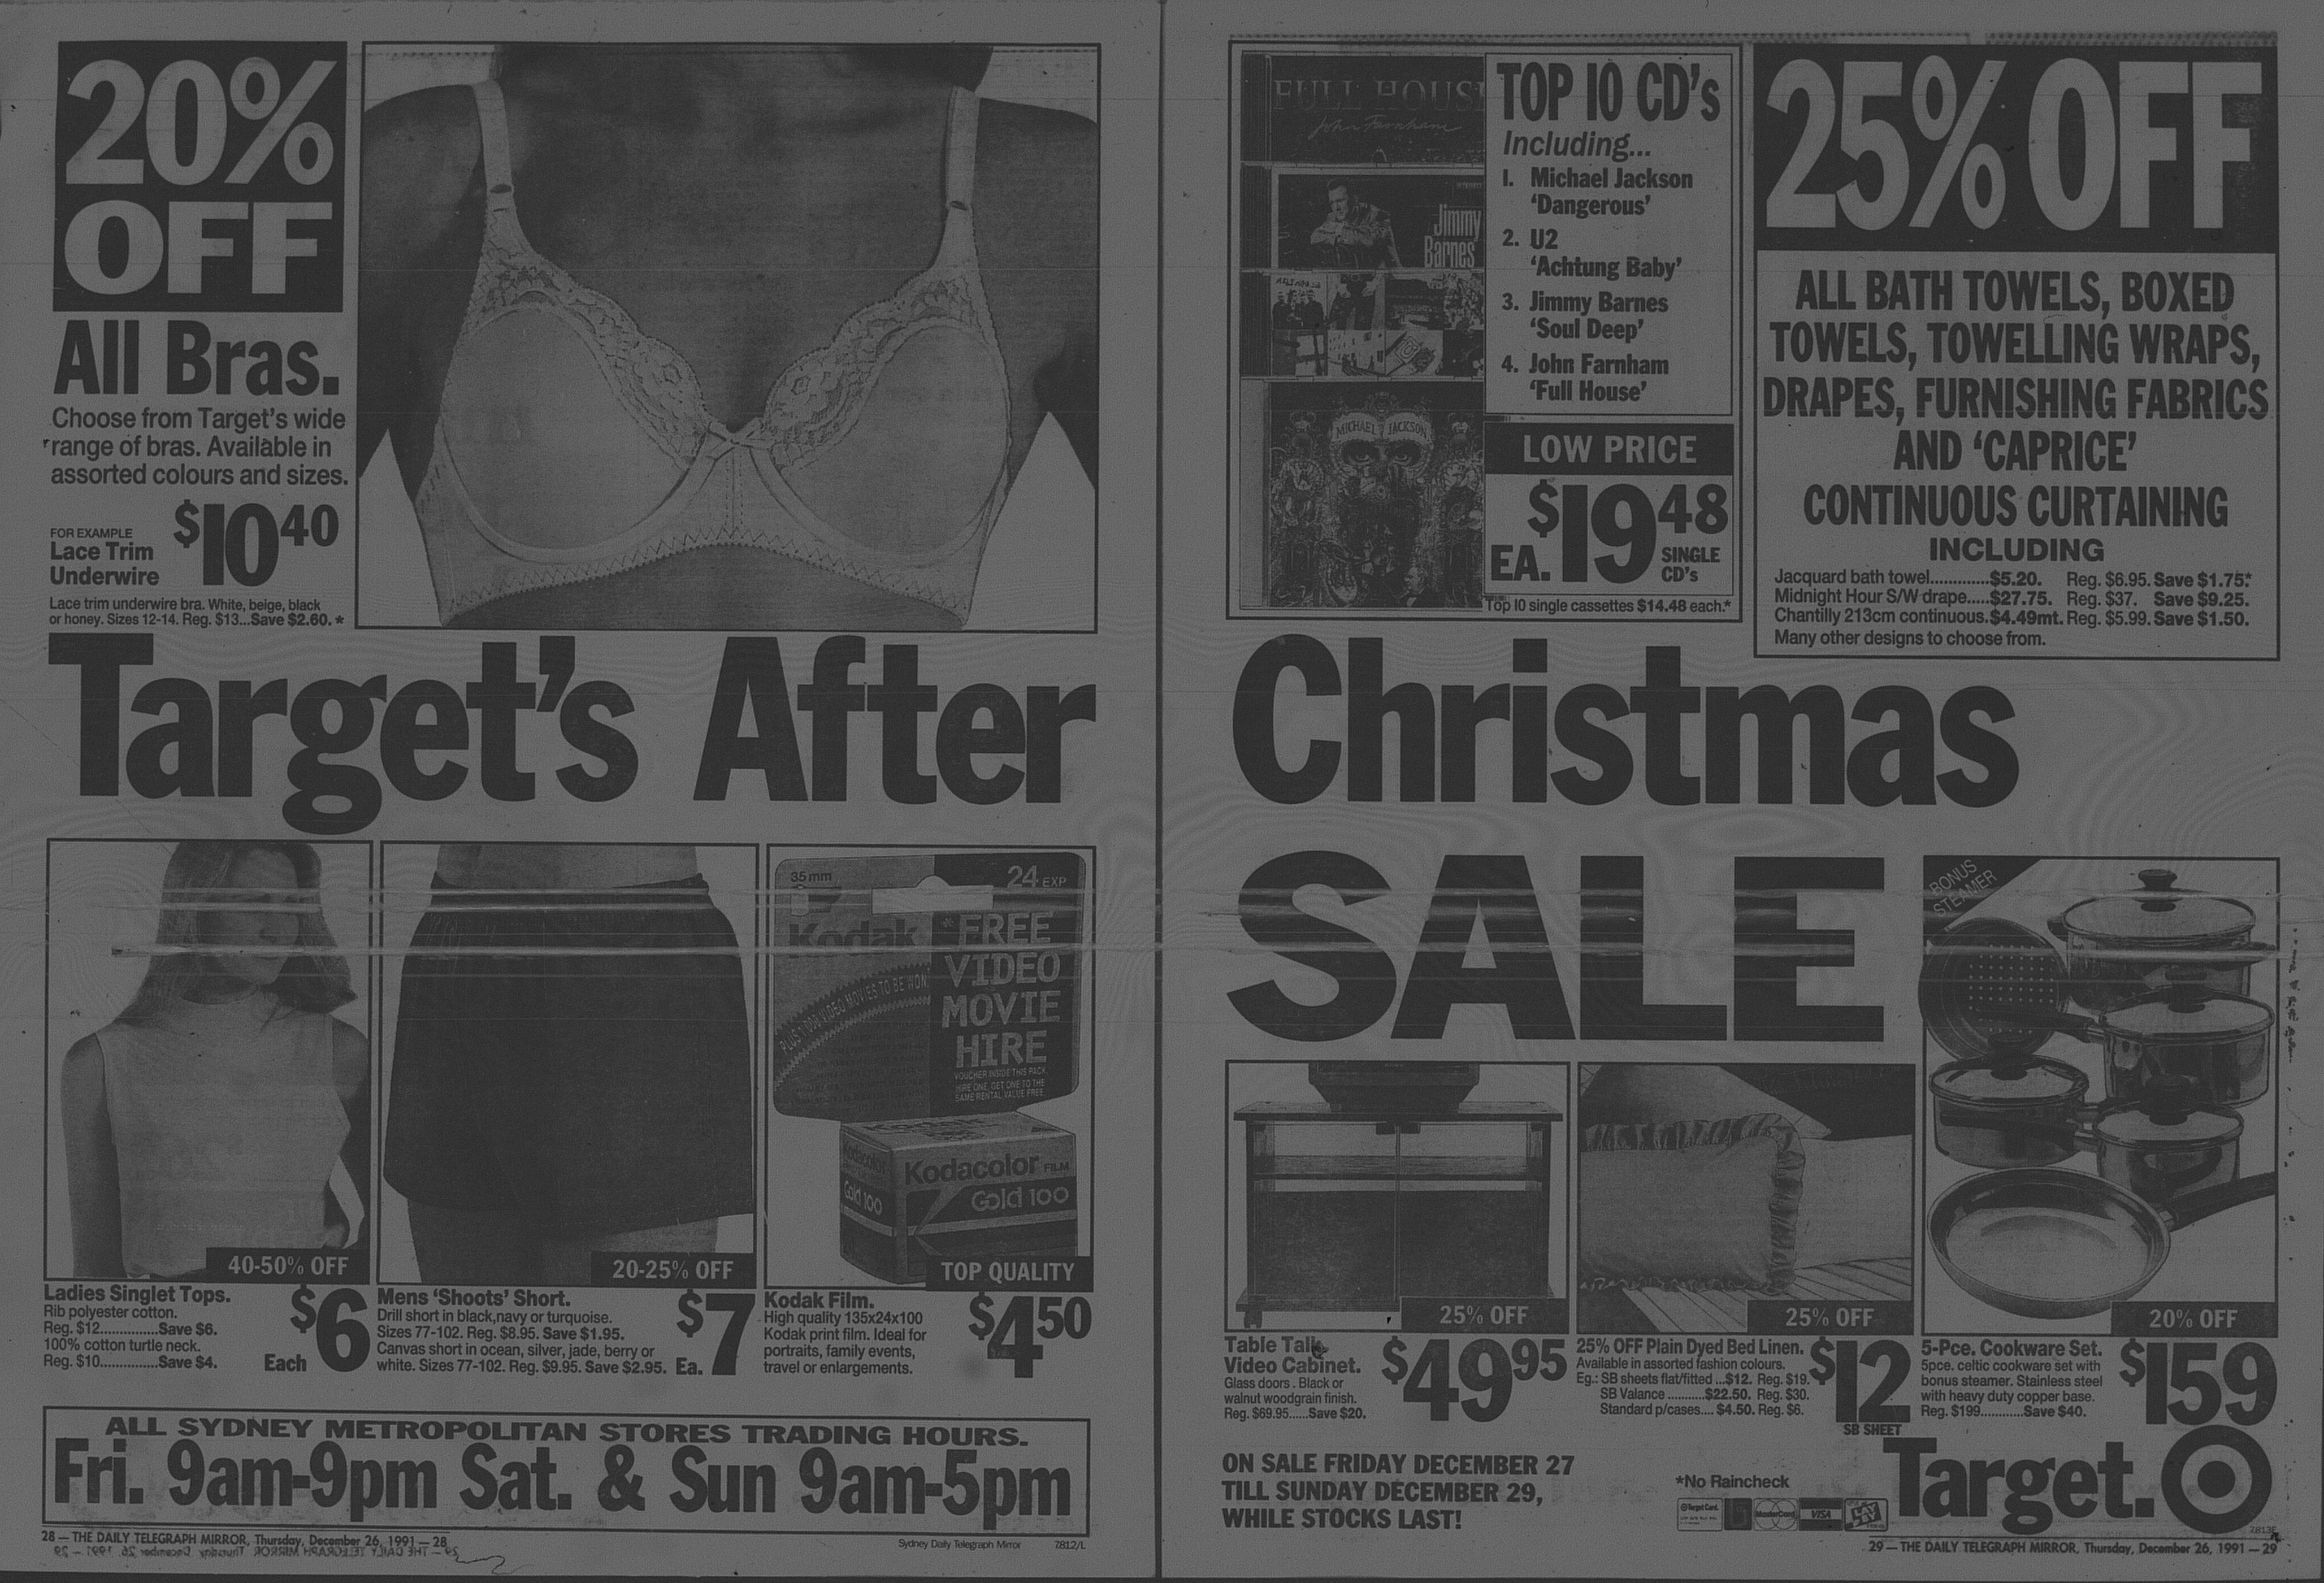 Target Ad December 26 1991 daily telegraph 28-29